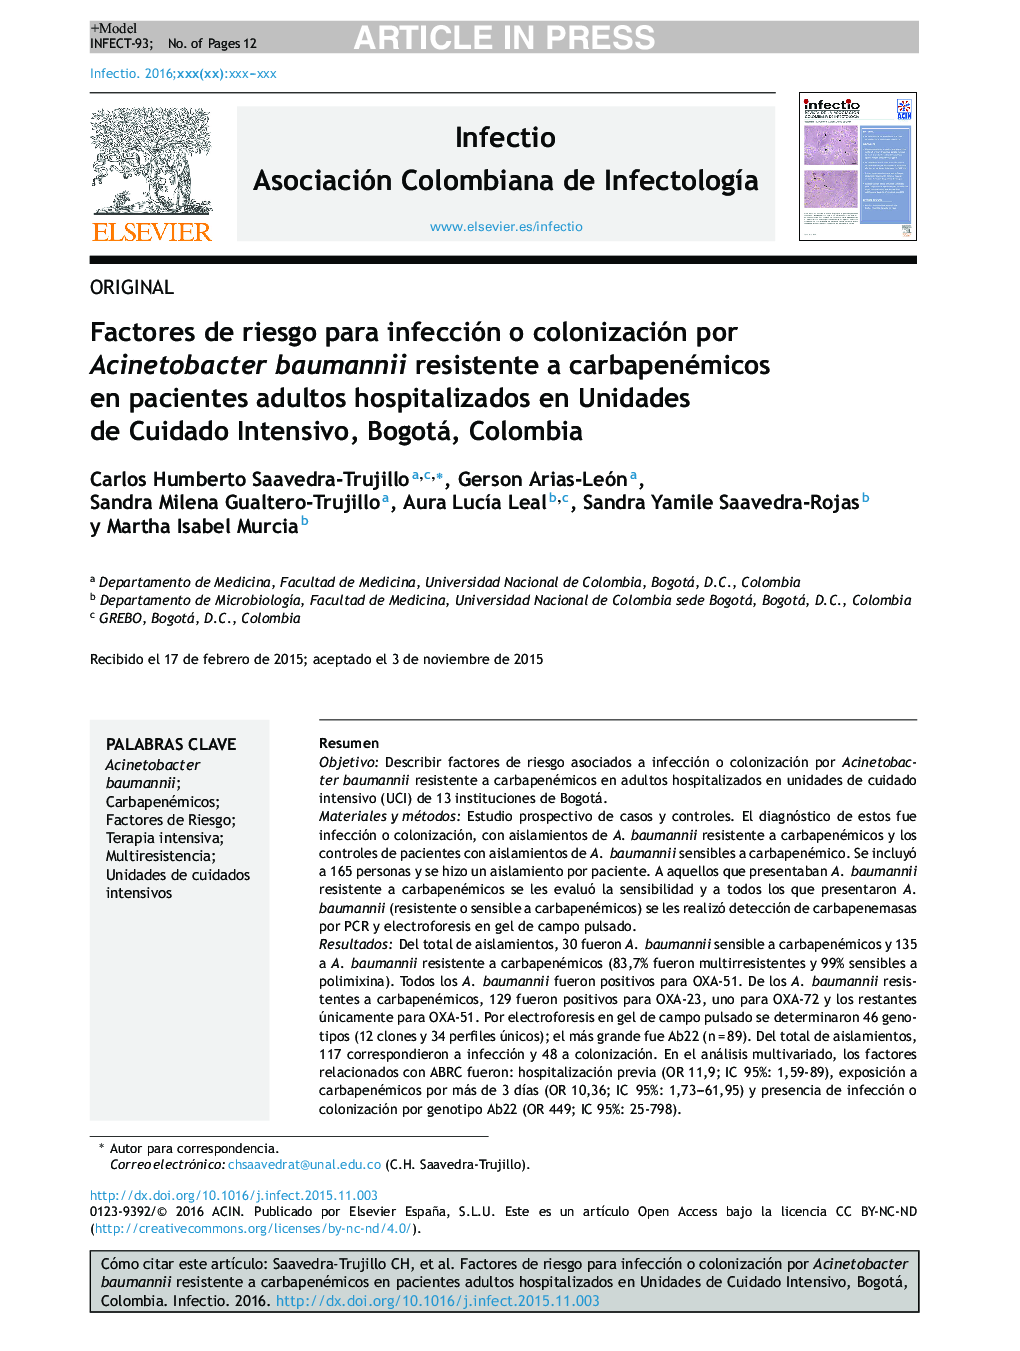 Factores de riesgo para infección o colonización por Acinetobacter baumannii resistente a carbapenémicos en pacientes adultos hospitalizados en Unidades de Cuidado Intensivo, Bogotá, Colombia